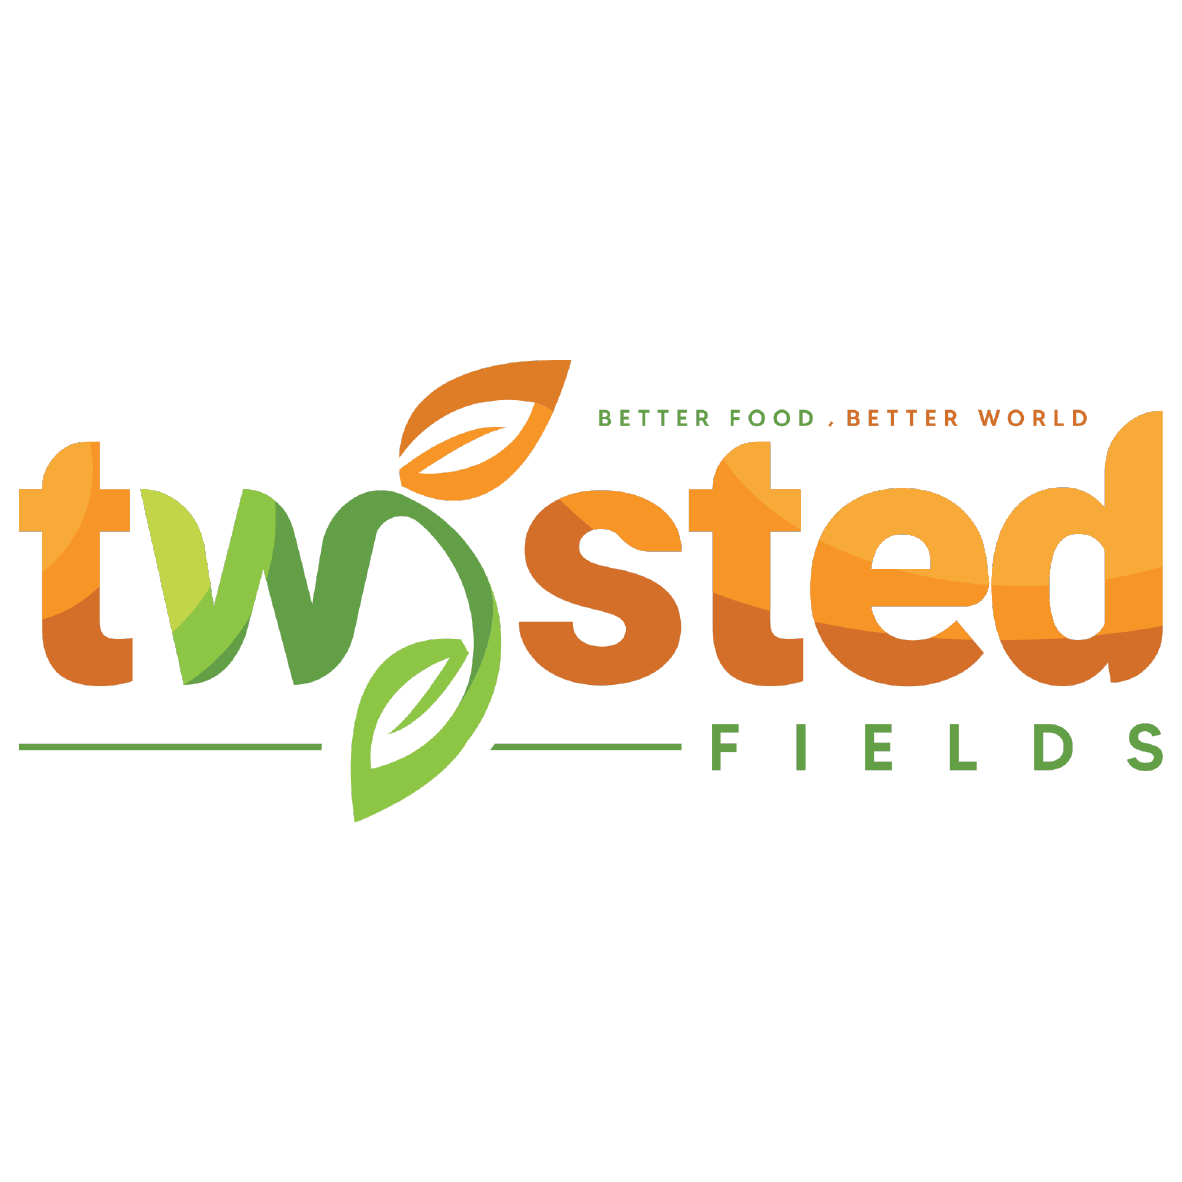 Twisted Fields Logo